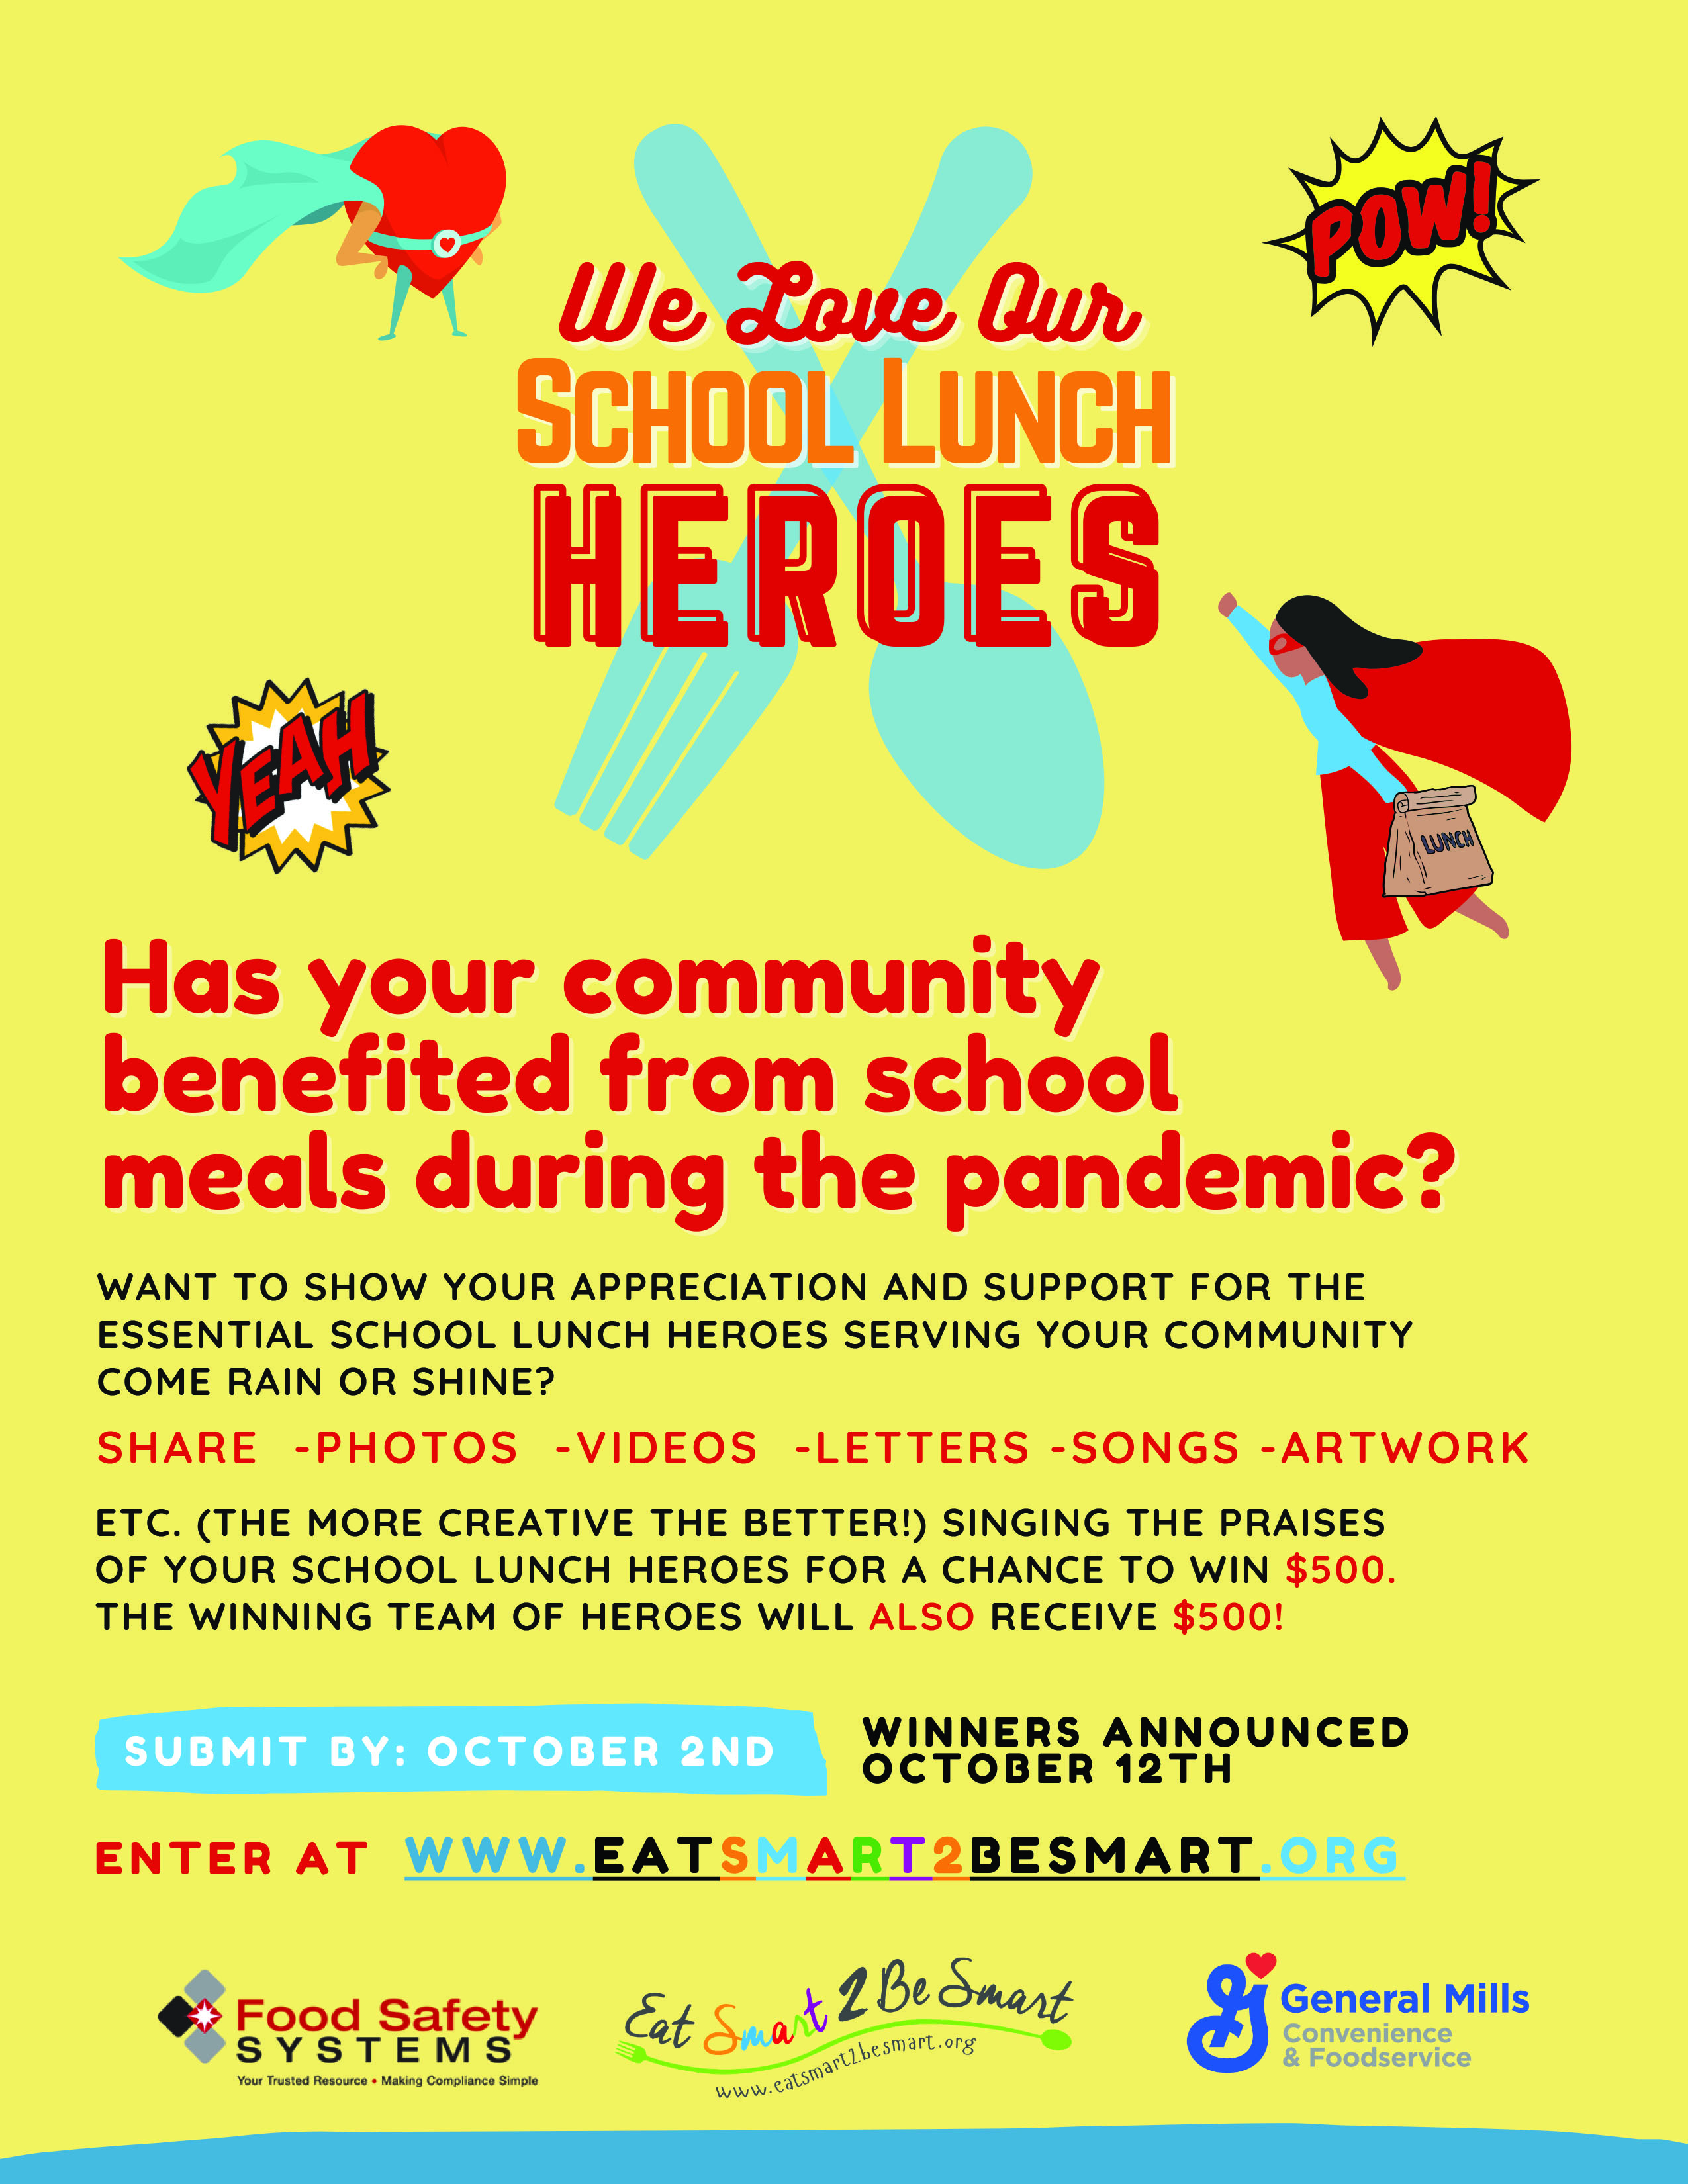 https://web.dusd.net/wp-content/uploads/2020/09/We-Love-Our-School-Lunch-Heroes-Contest.jpg